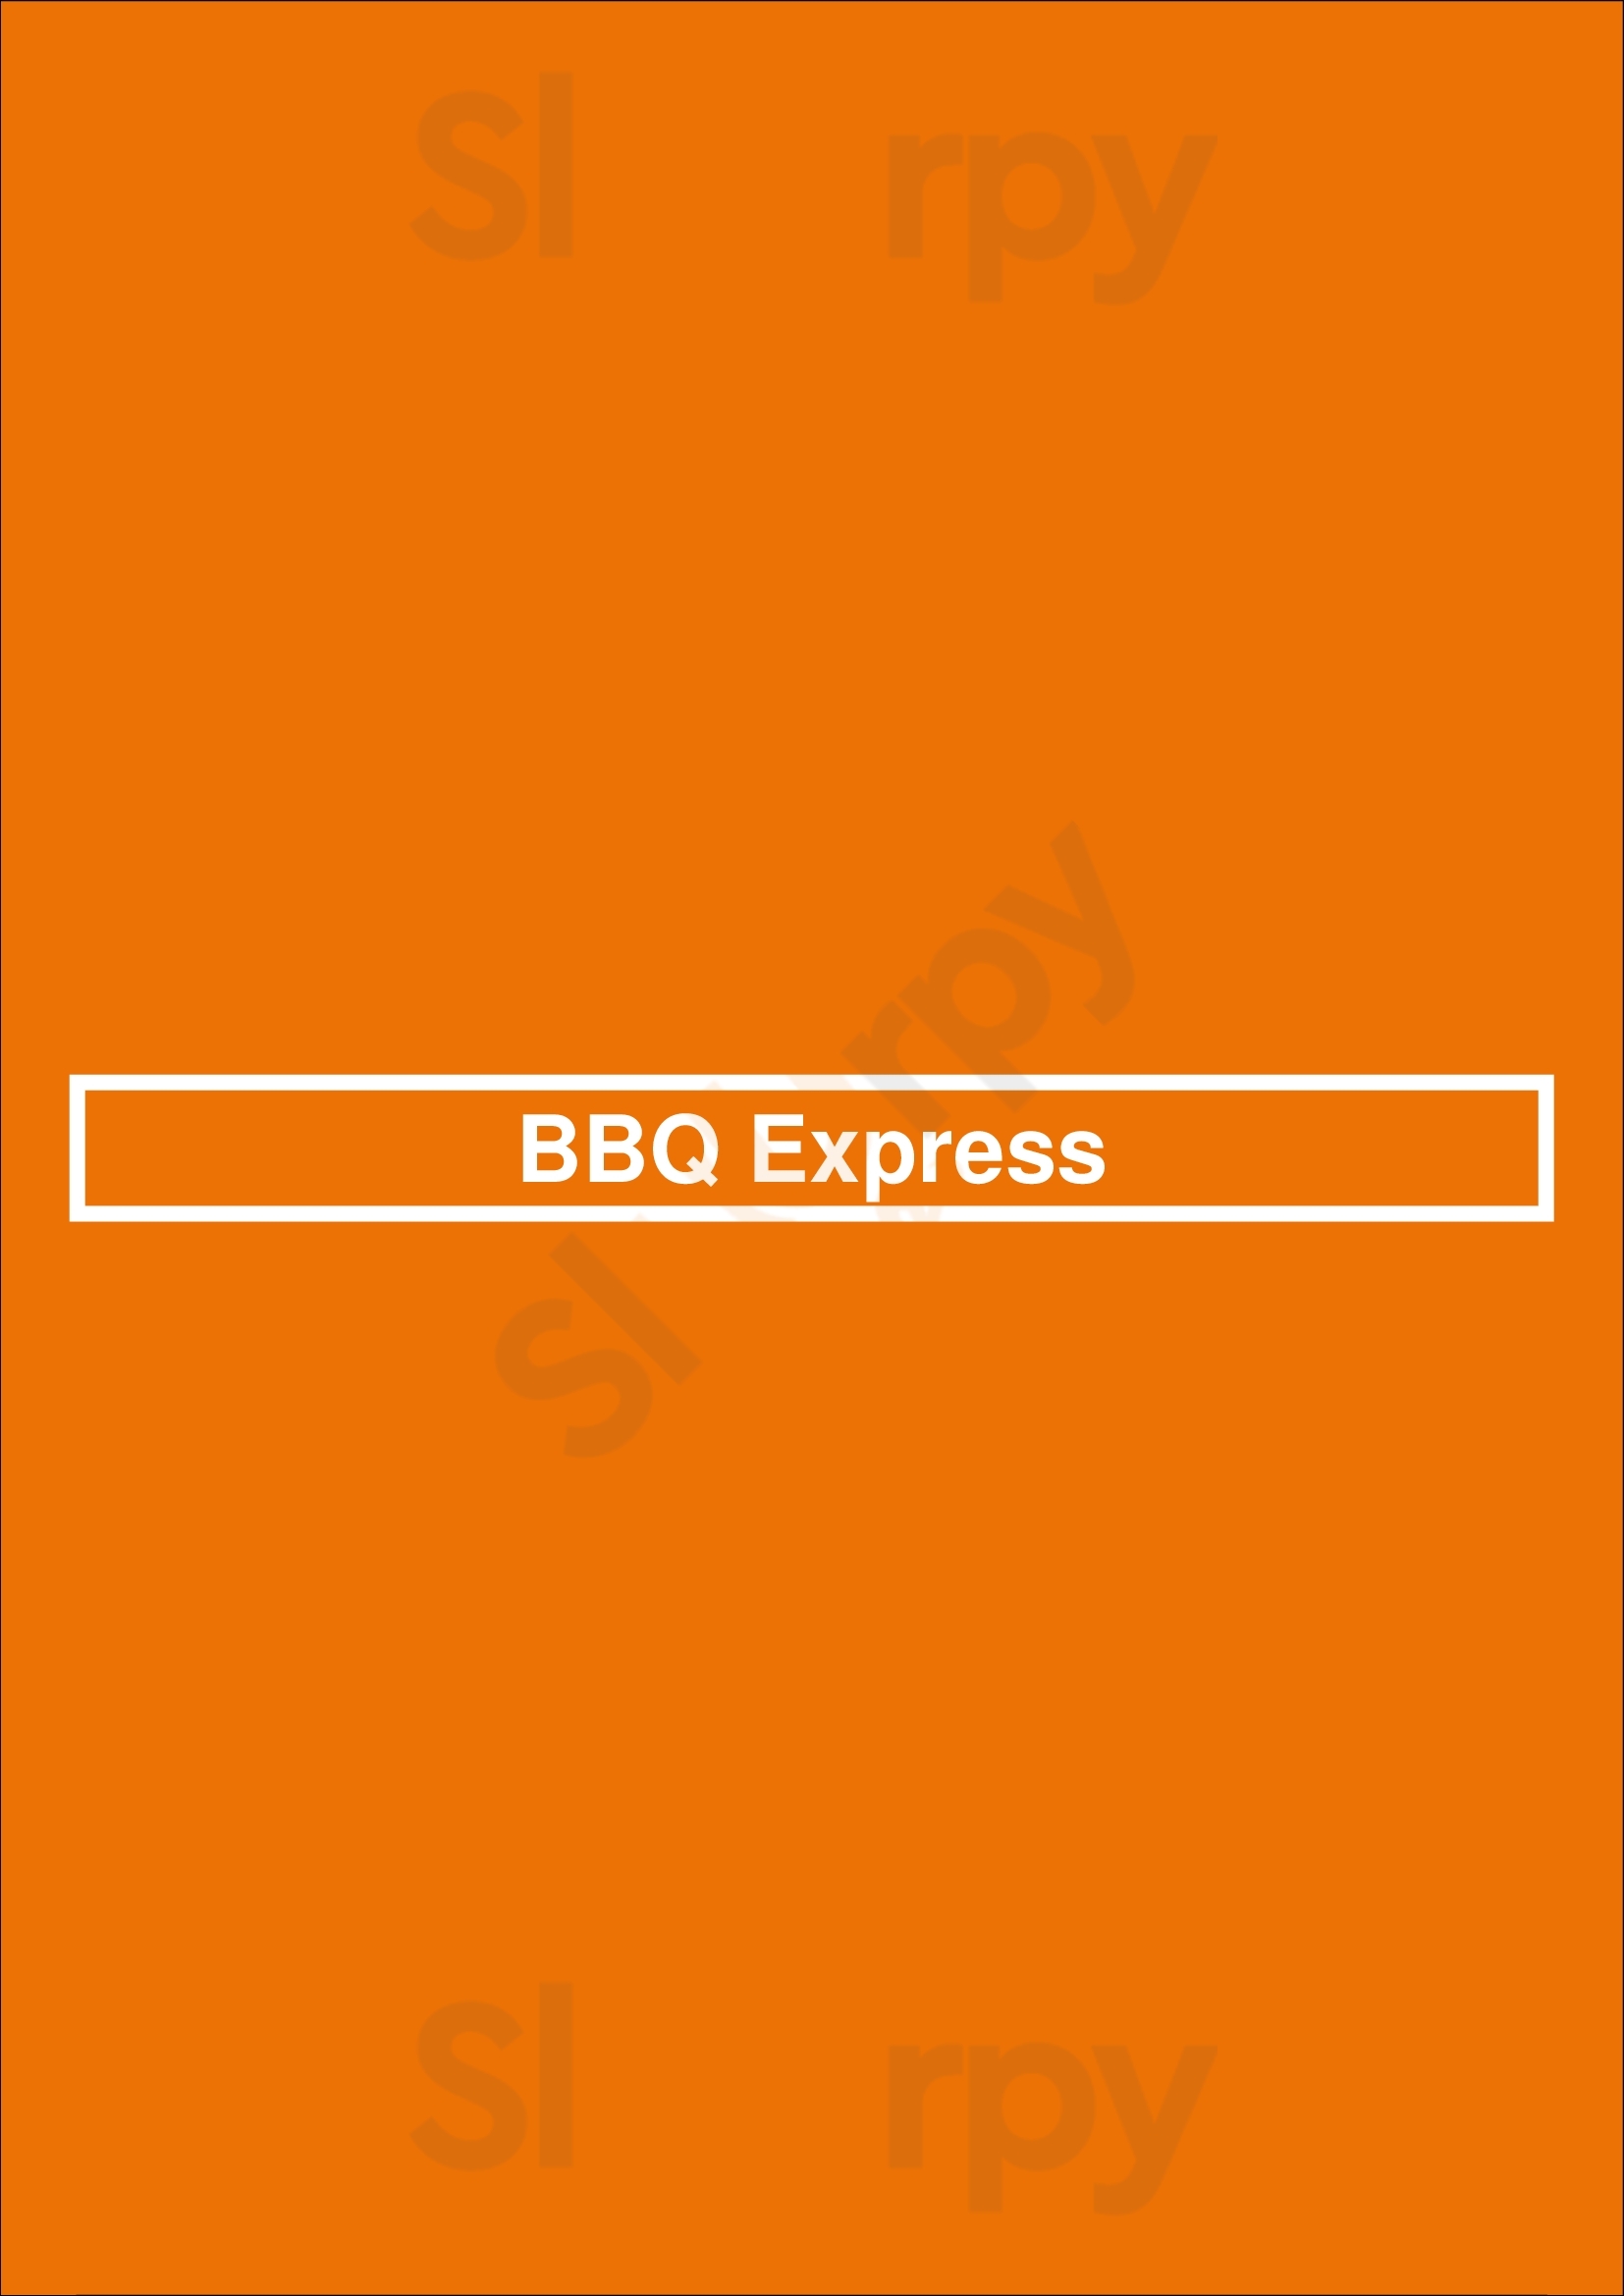 Bbq Express London Menu - 1